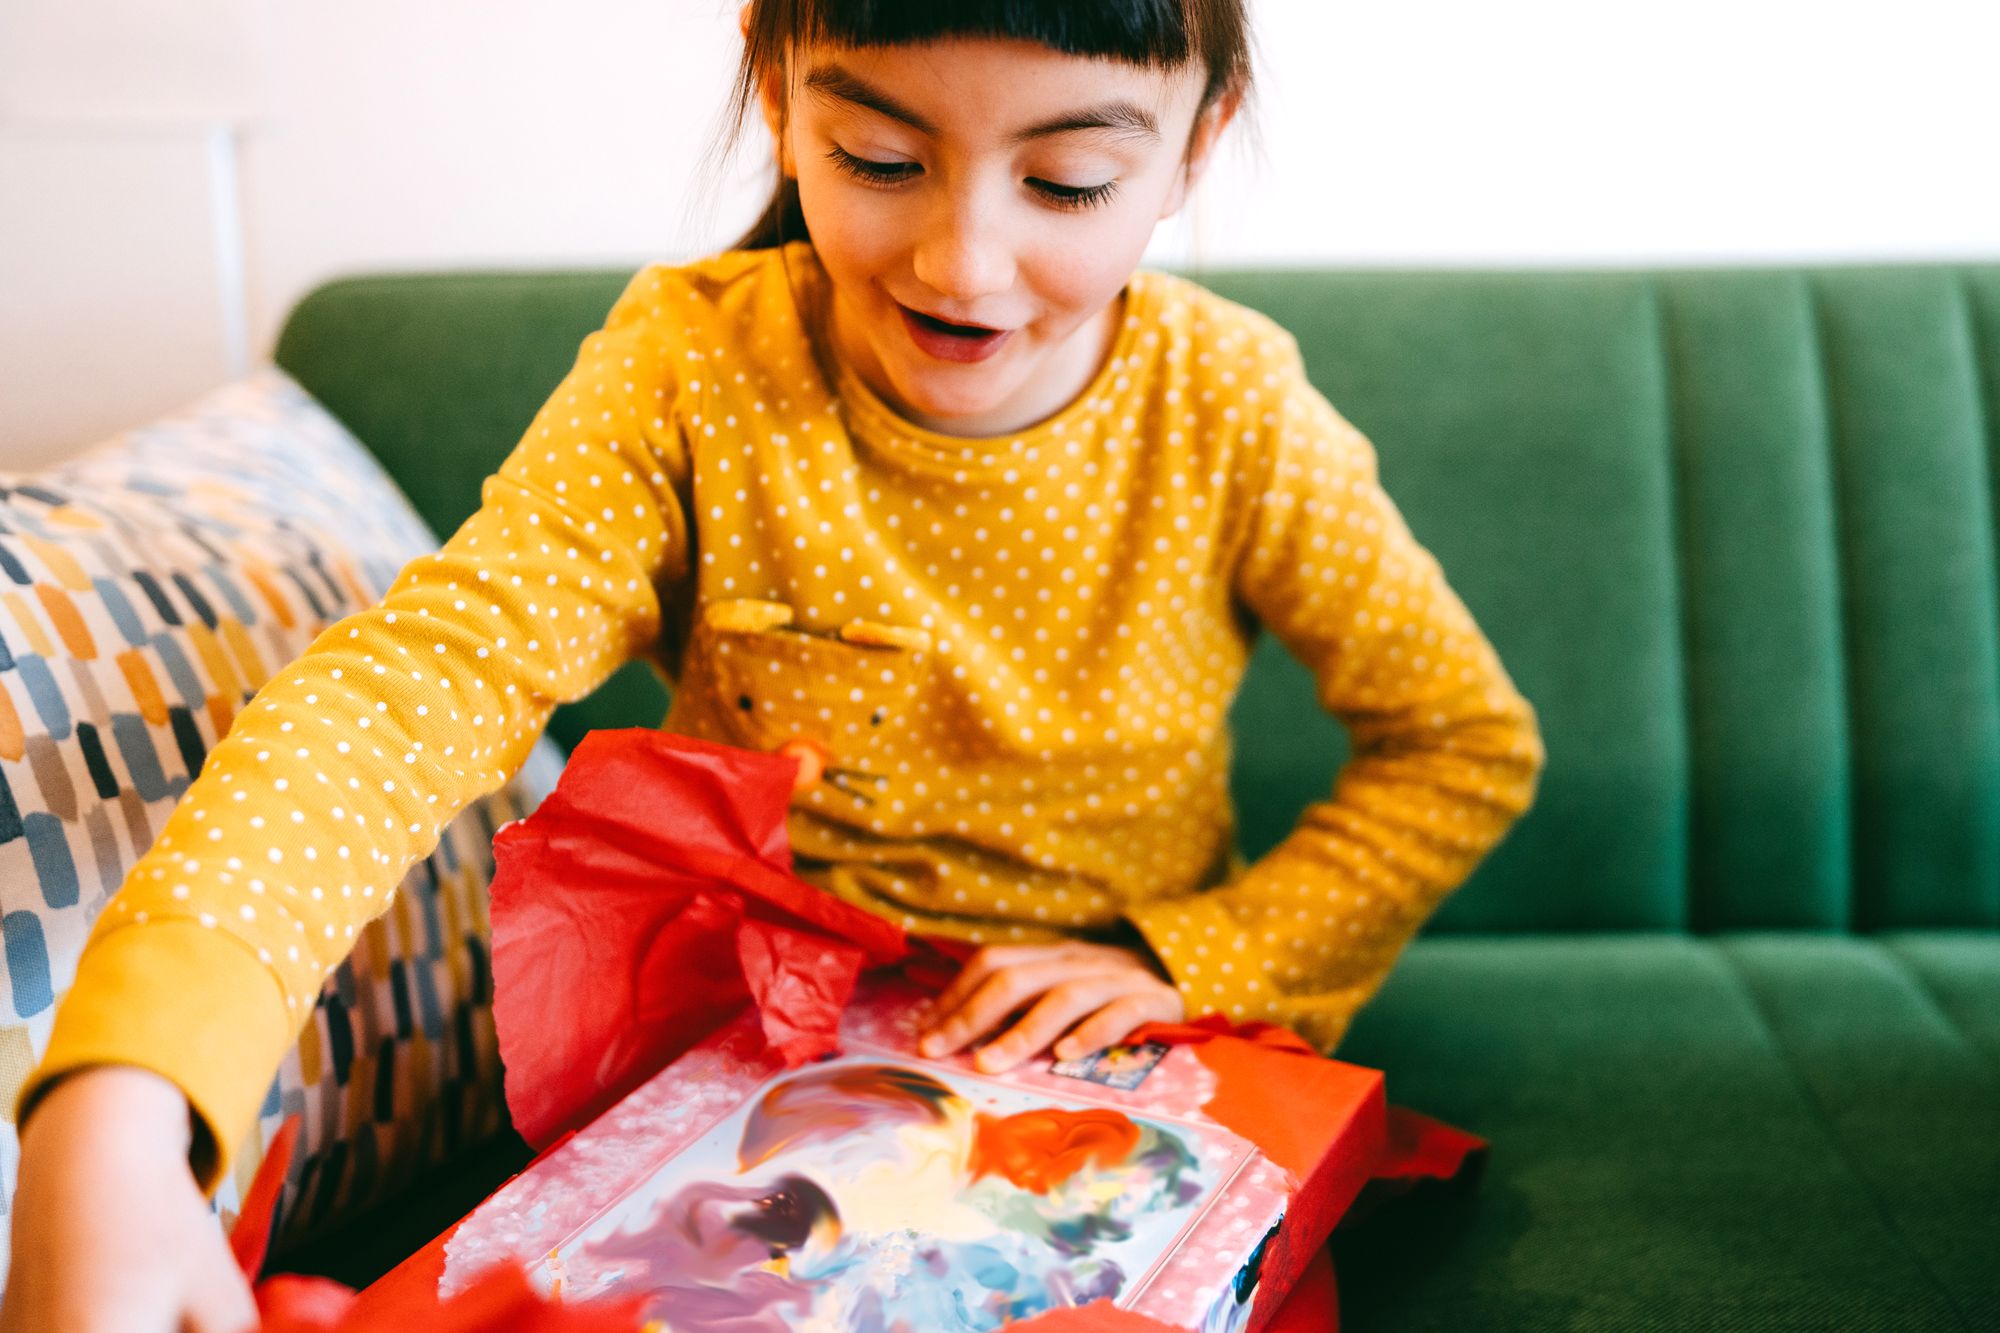 SYAOMUNLY Toys for 4 Year Old Girl Birthday Gifts Kuwait | Ubuy